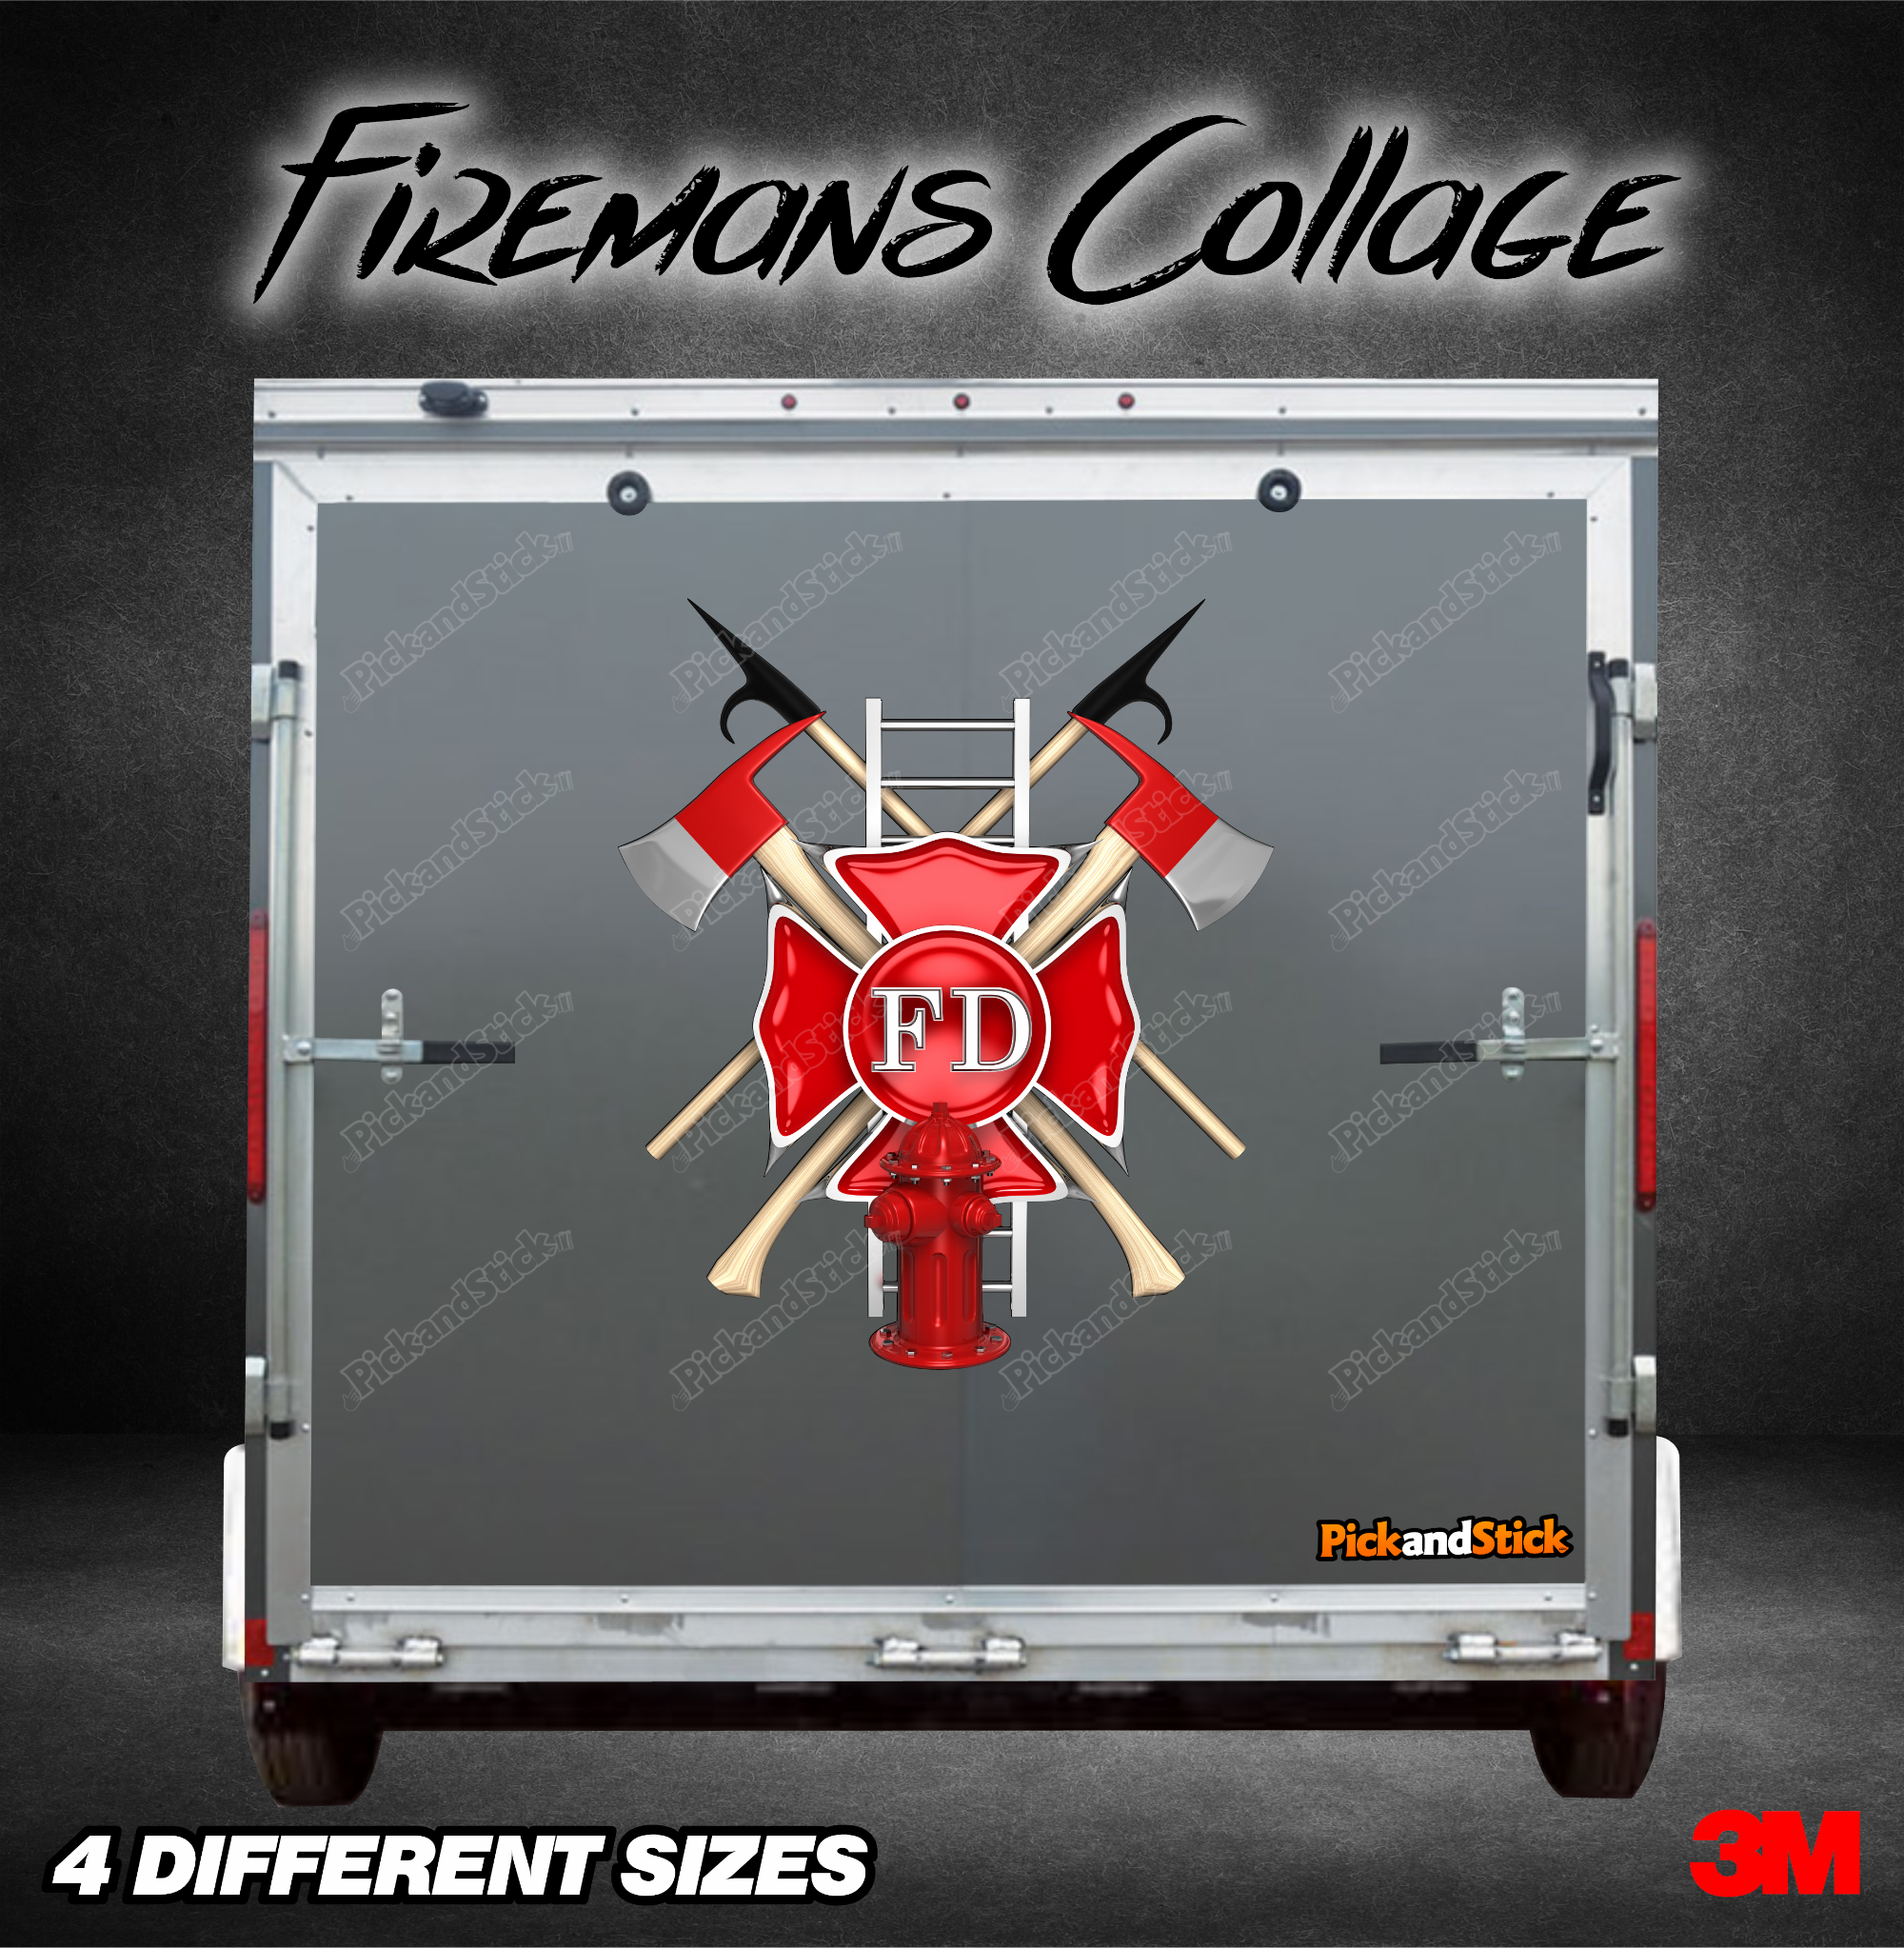 Firemans Collage Trailer Graphic - PickandStickcom